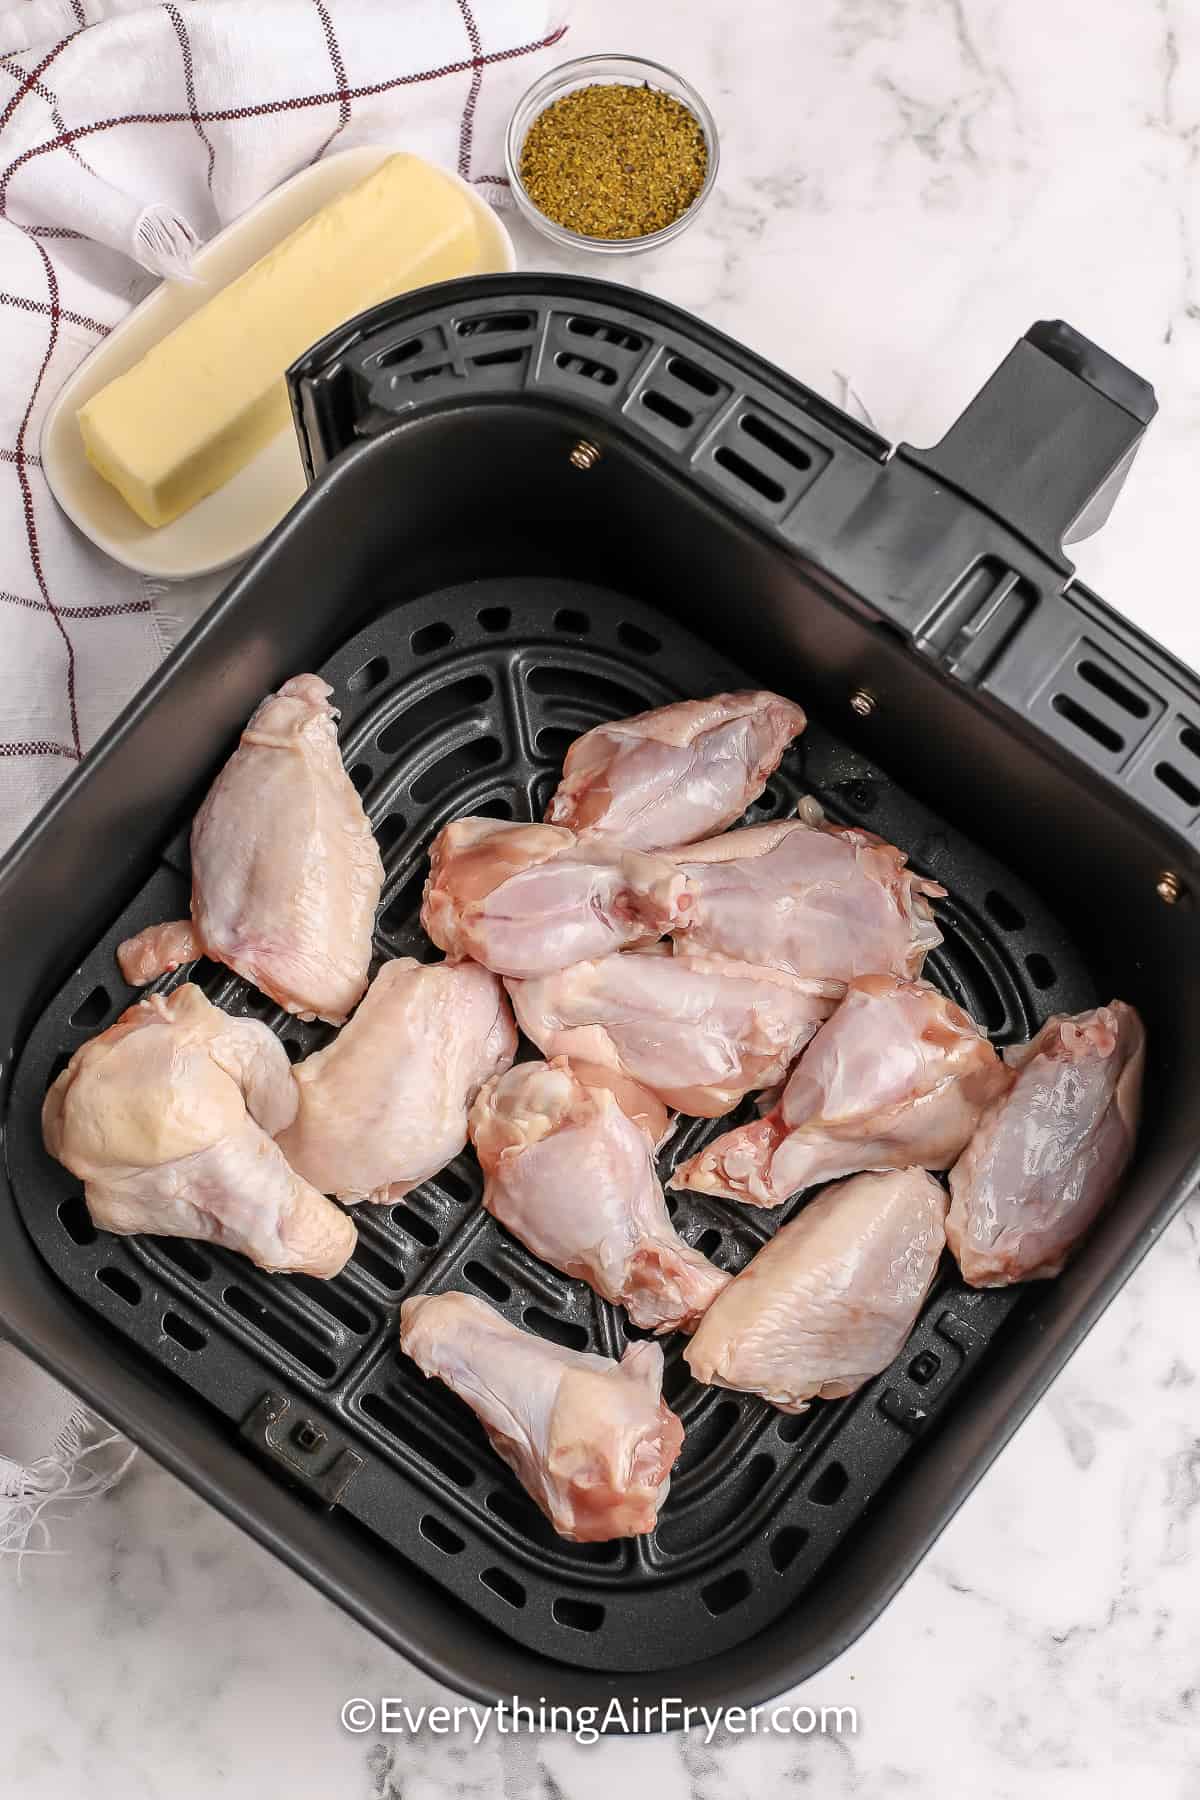 Raw chicken wings in an air fryer basket